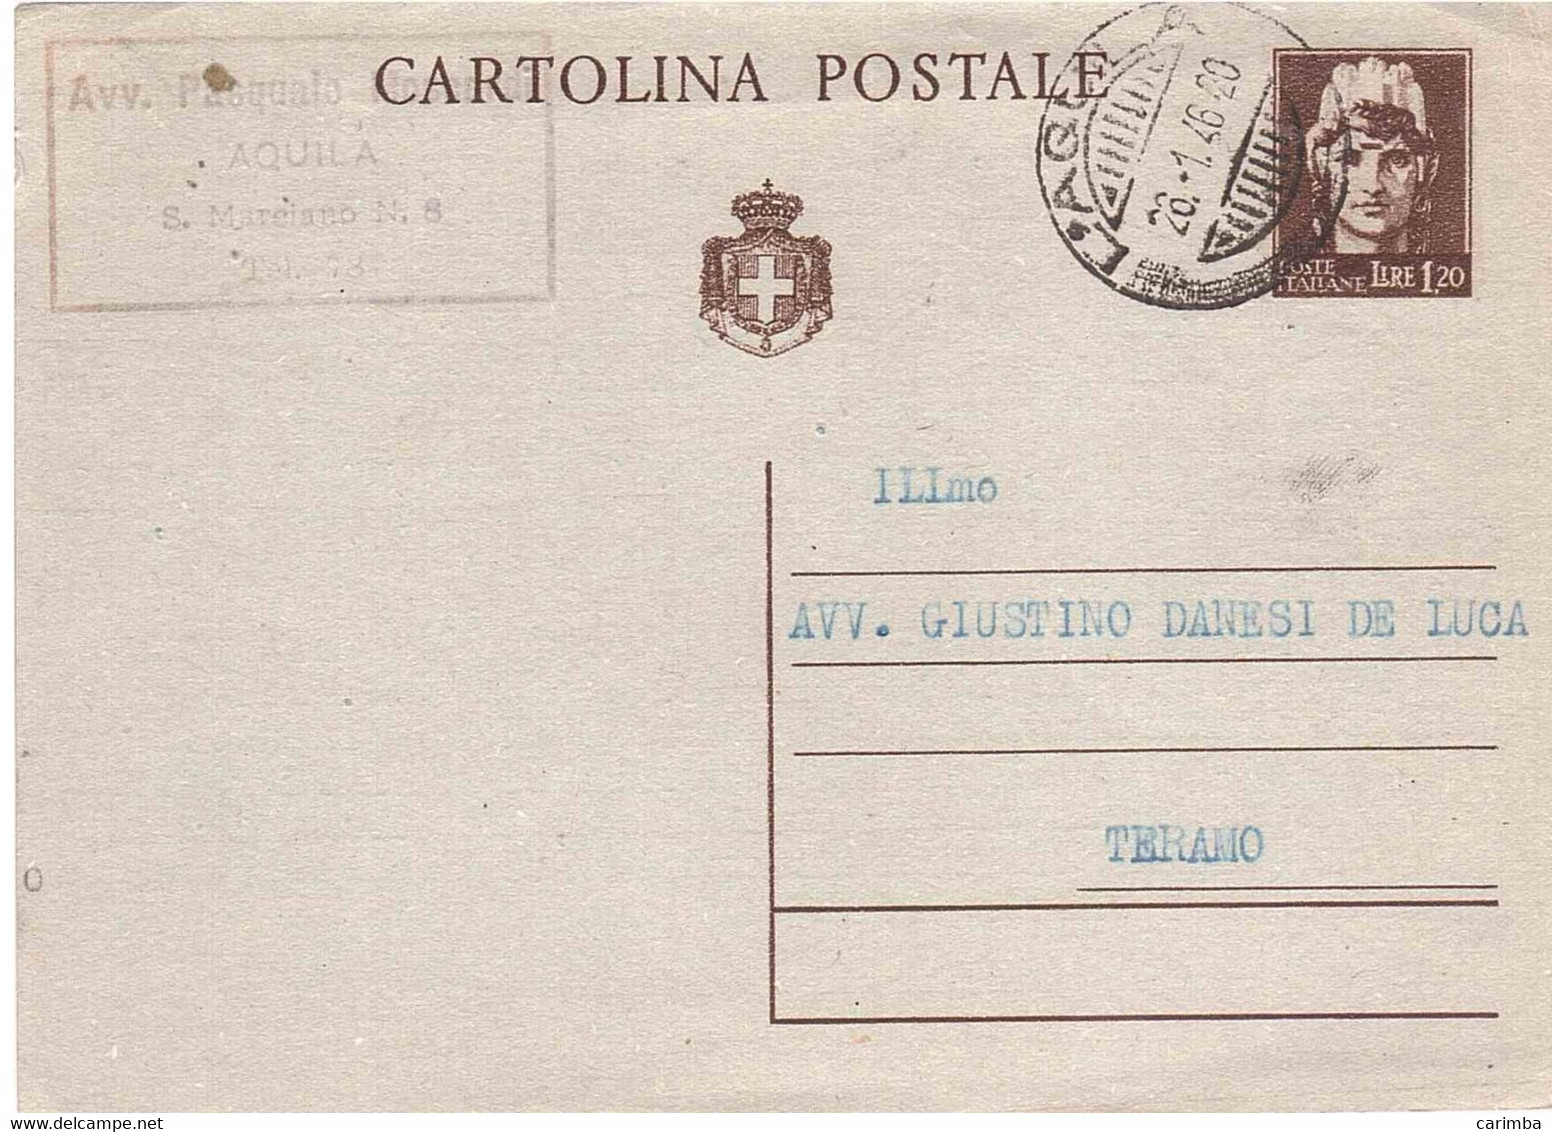 CARTOLINA POSTALE LIRE 1,20 - Stamped Stationery